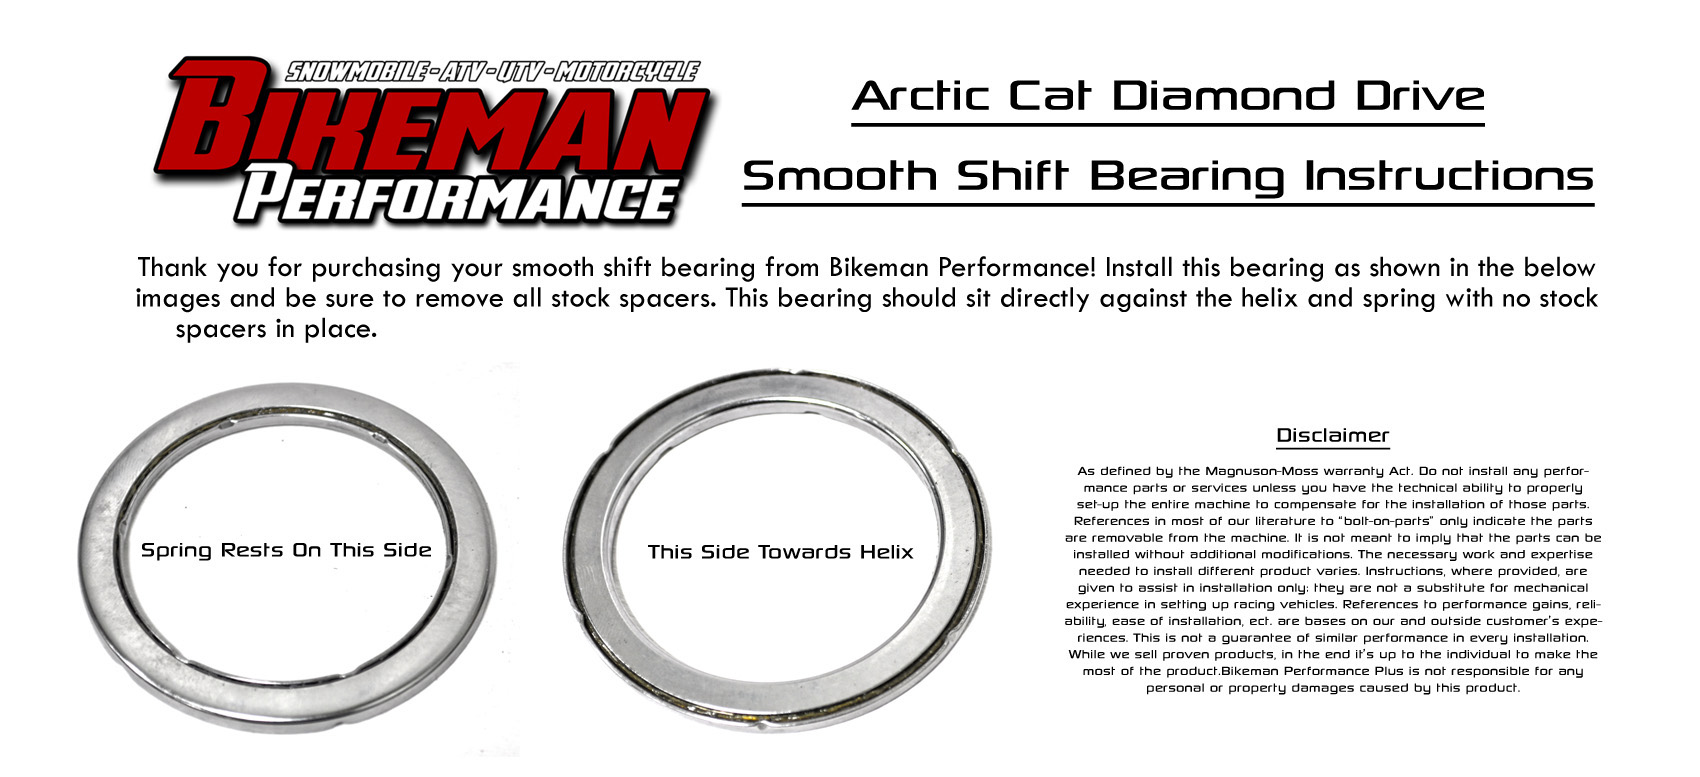 Bikeman Smooth SHift Bearing for arctic cat